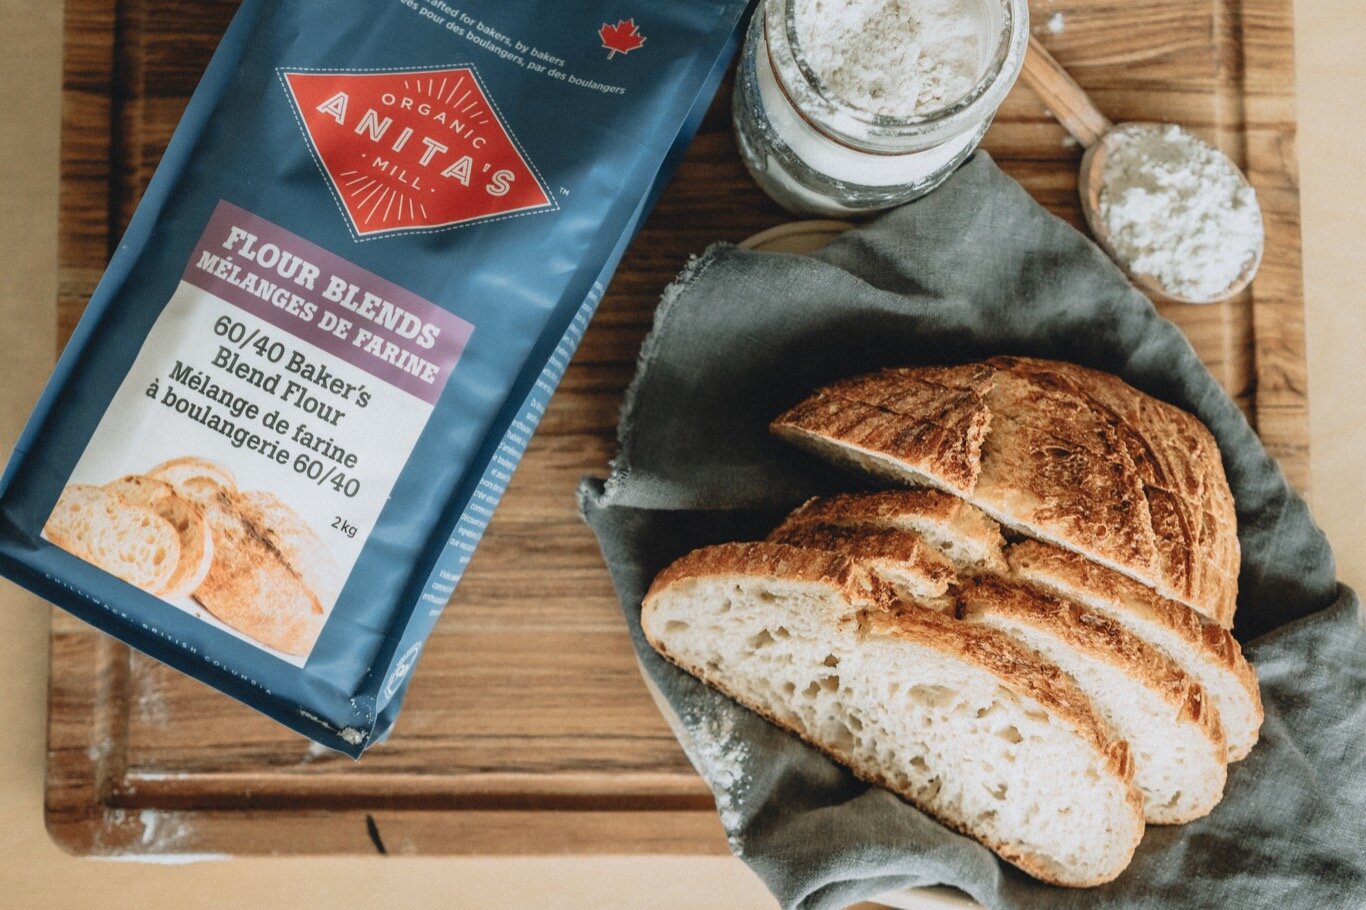 Anitas-Organic-Mill-Product-2020-flour-blend-1kg-60-40-baker-bread-flour-web.jpg